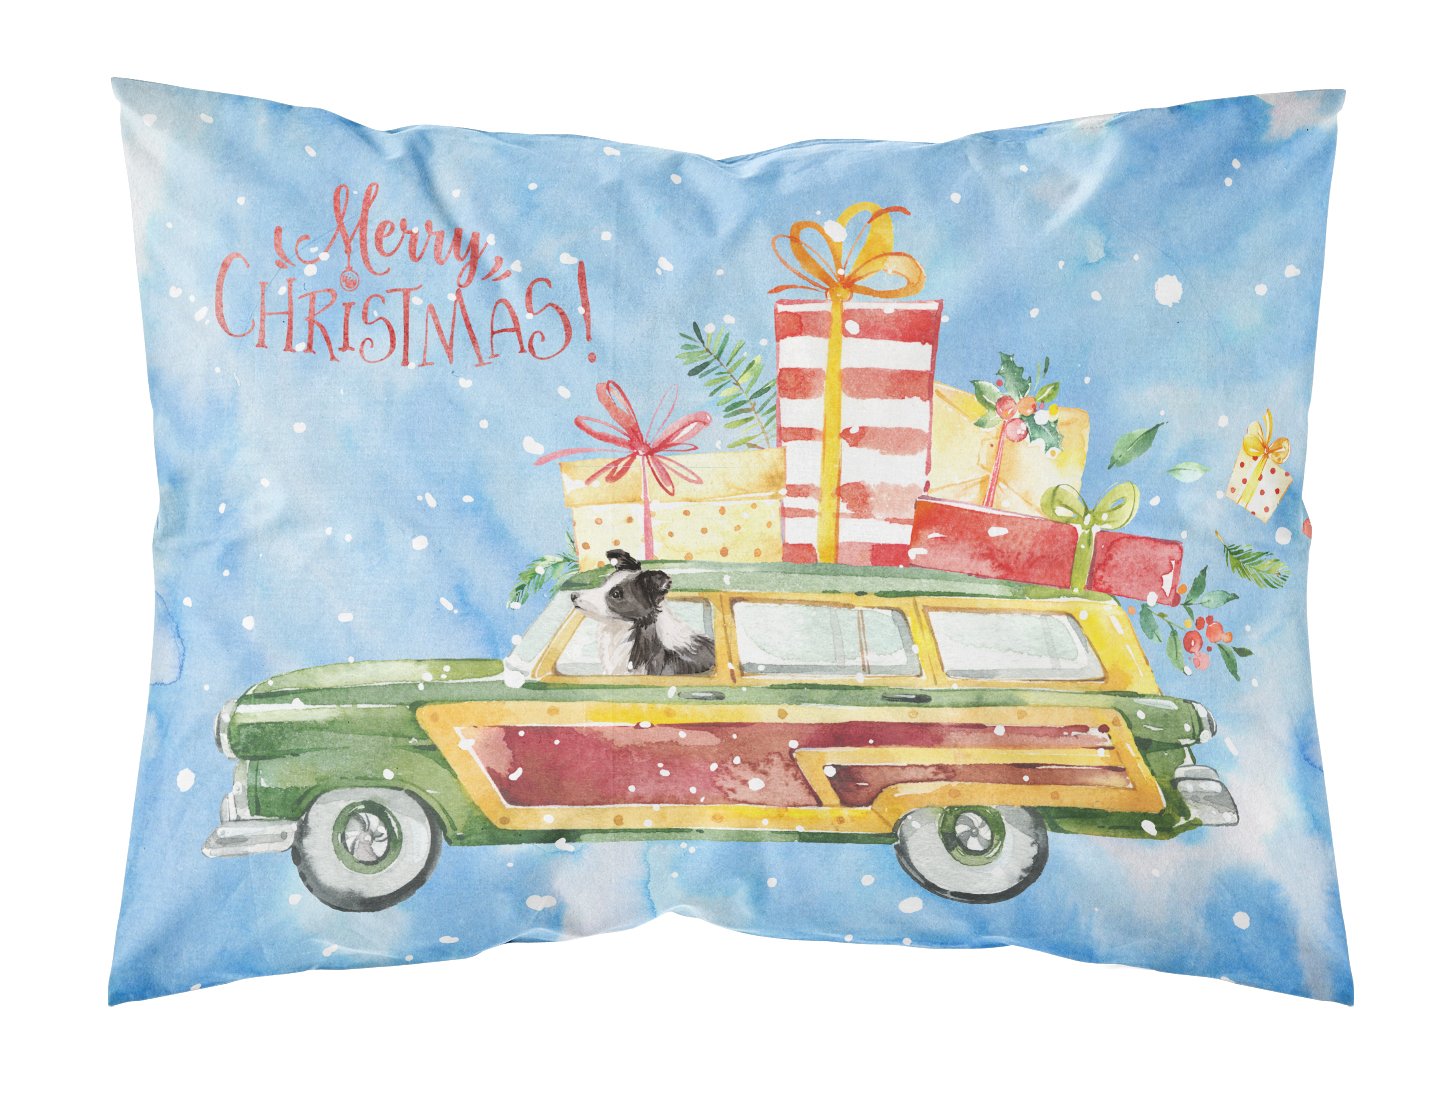 Merry Christmas Border Collie Fabric Standard Pillowcase CK2445PILLOWCASE by Caroline's Treasures